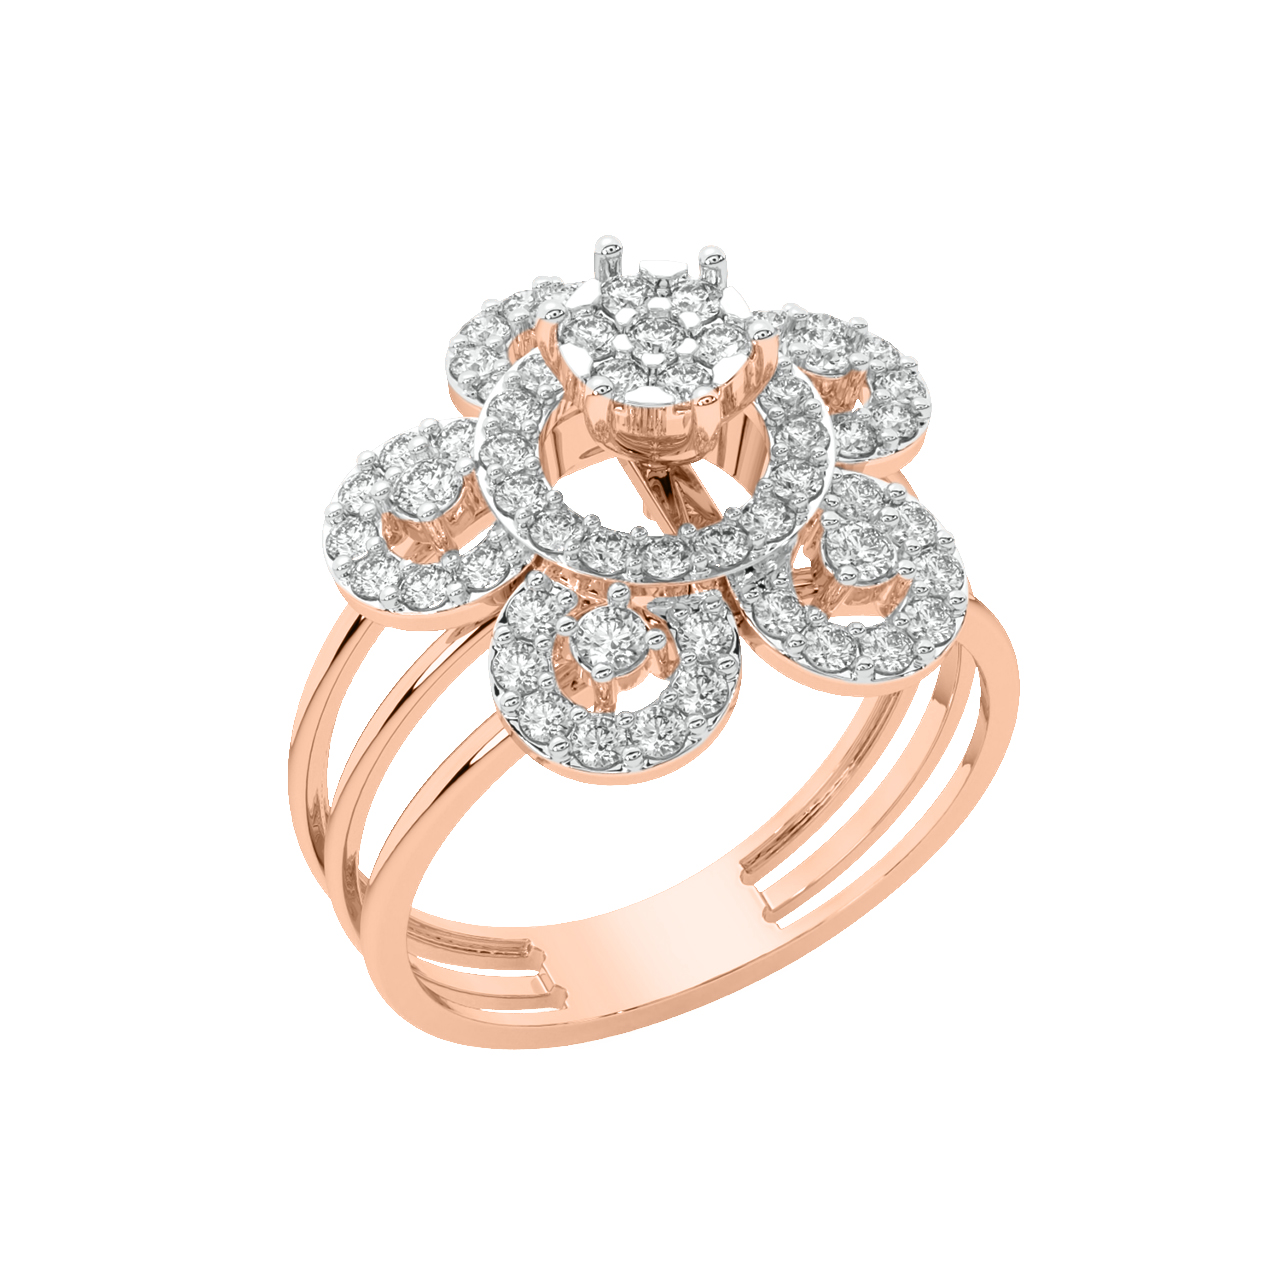 Leon Round Diamond Engagement Ring